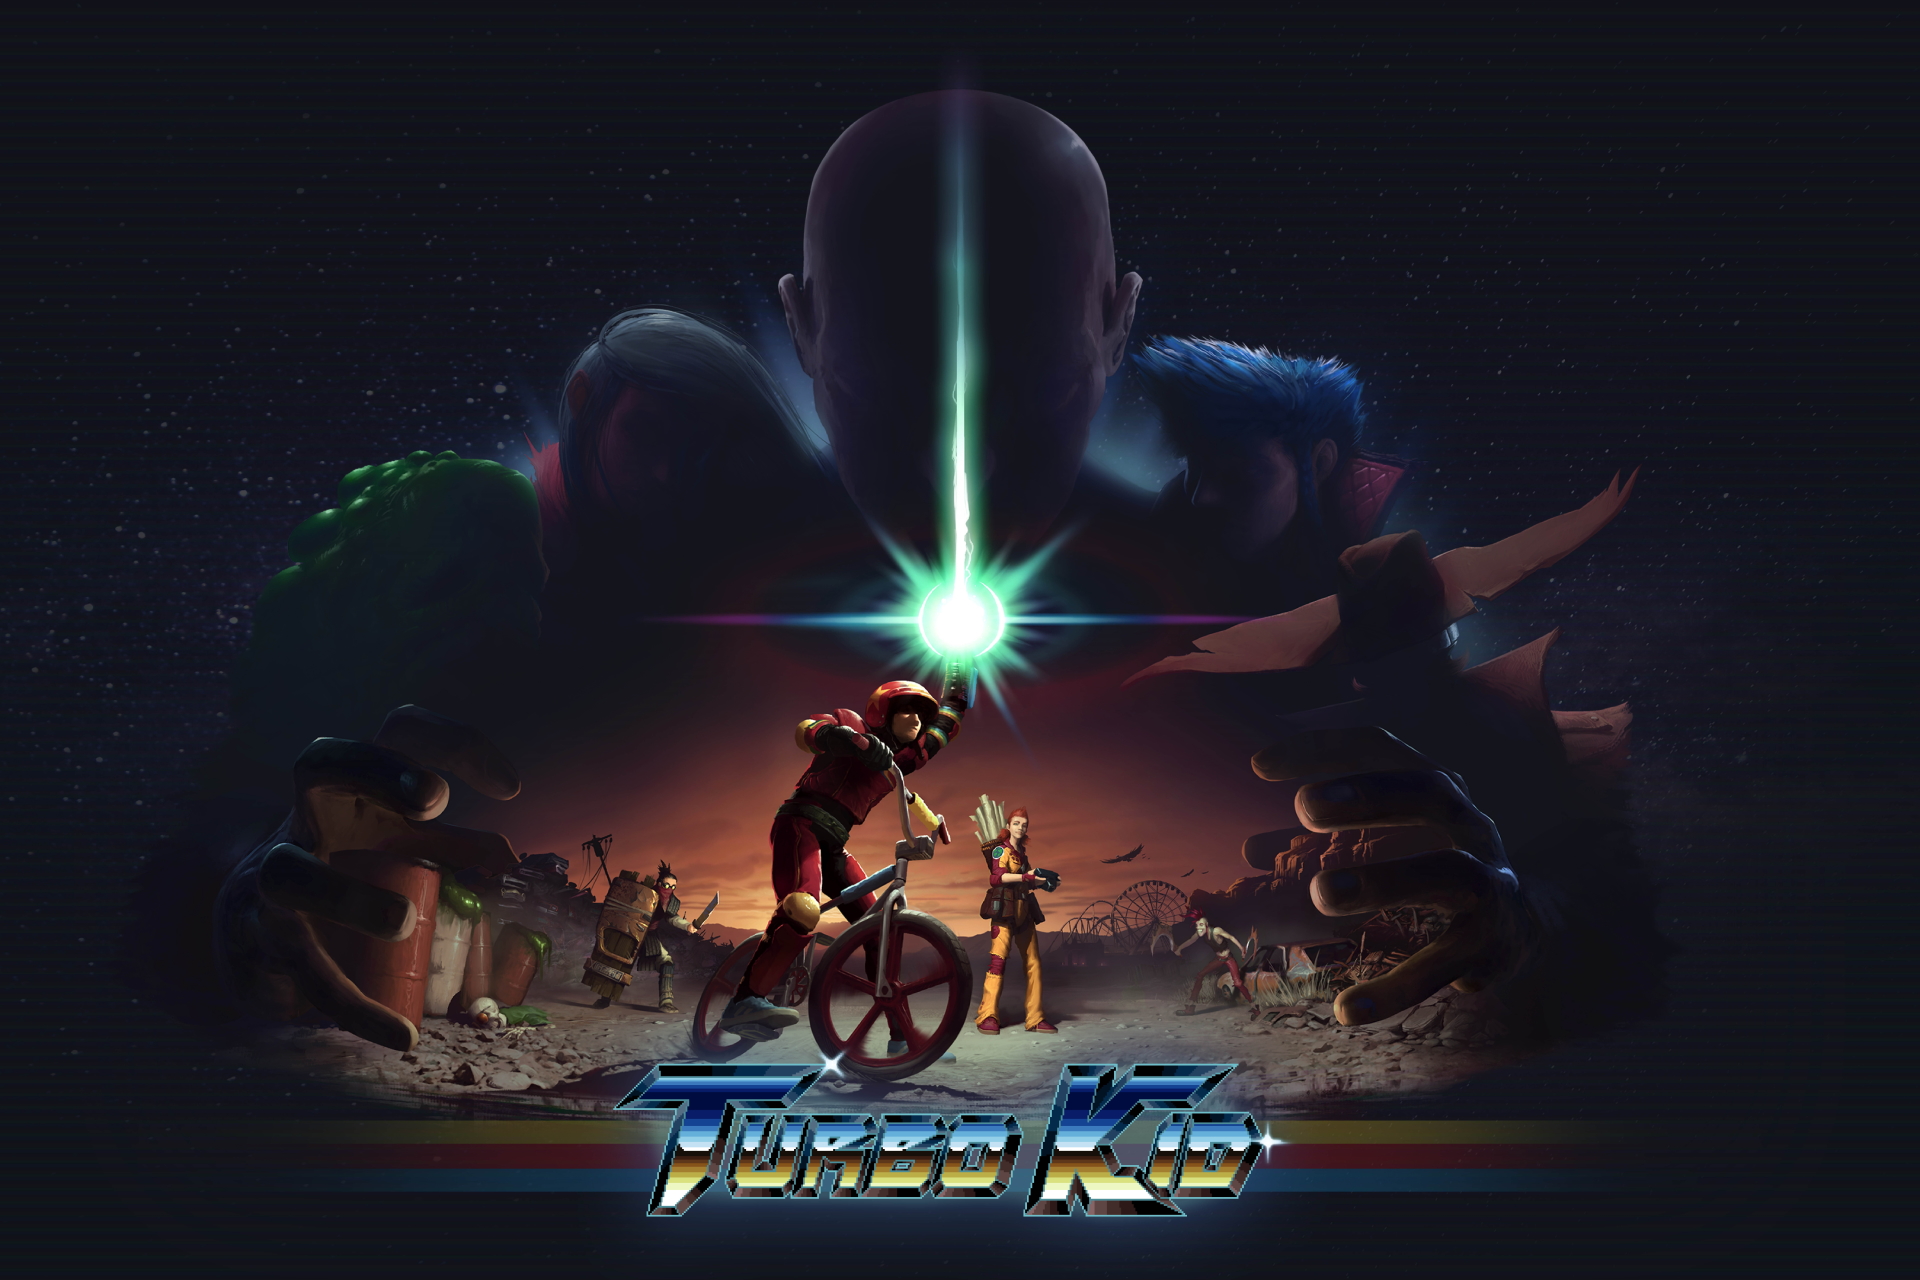 Turbo Kid : 6 ans après sa sortie, l'atypique film de SF rétro va être adapté en jeu vidéo